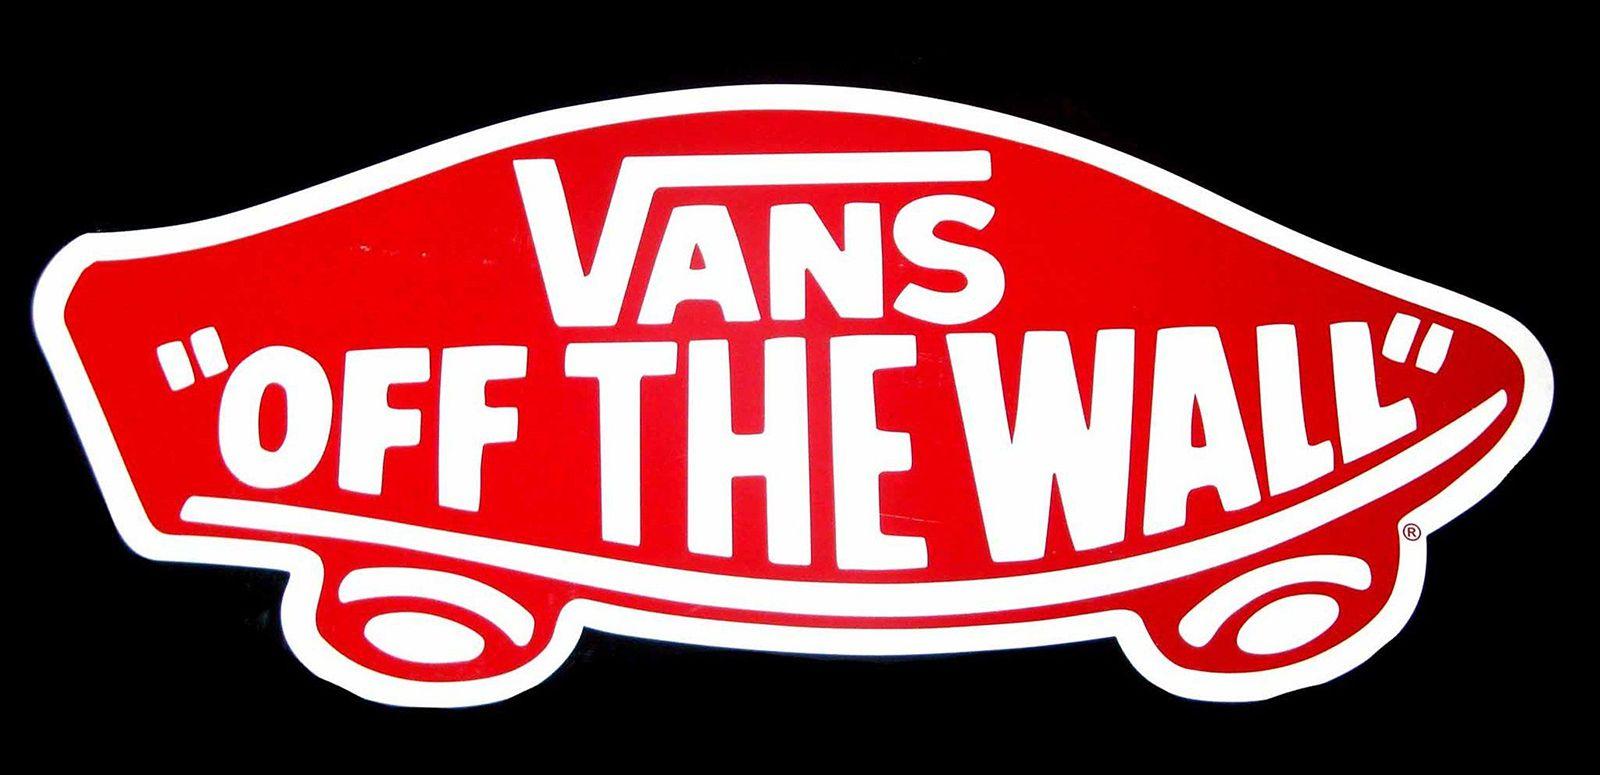 Vans Logo - Color Vans Logo | All logos world in 2019 | Vans logo, Vans, Logos